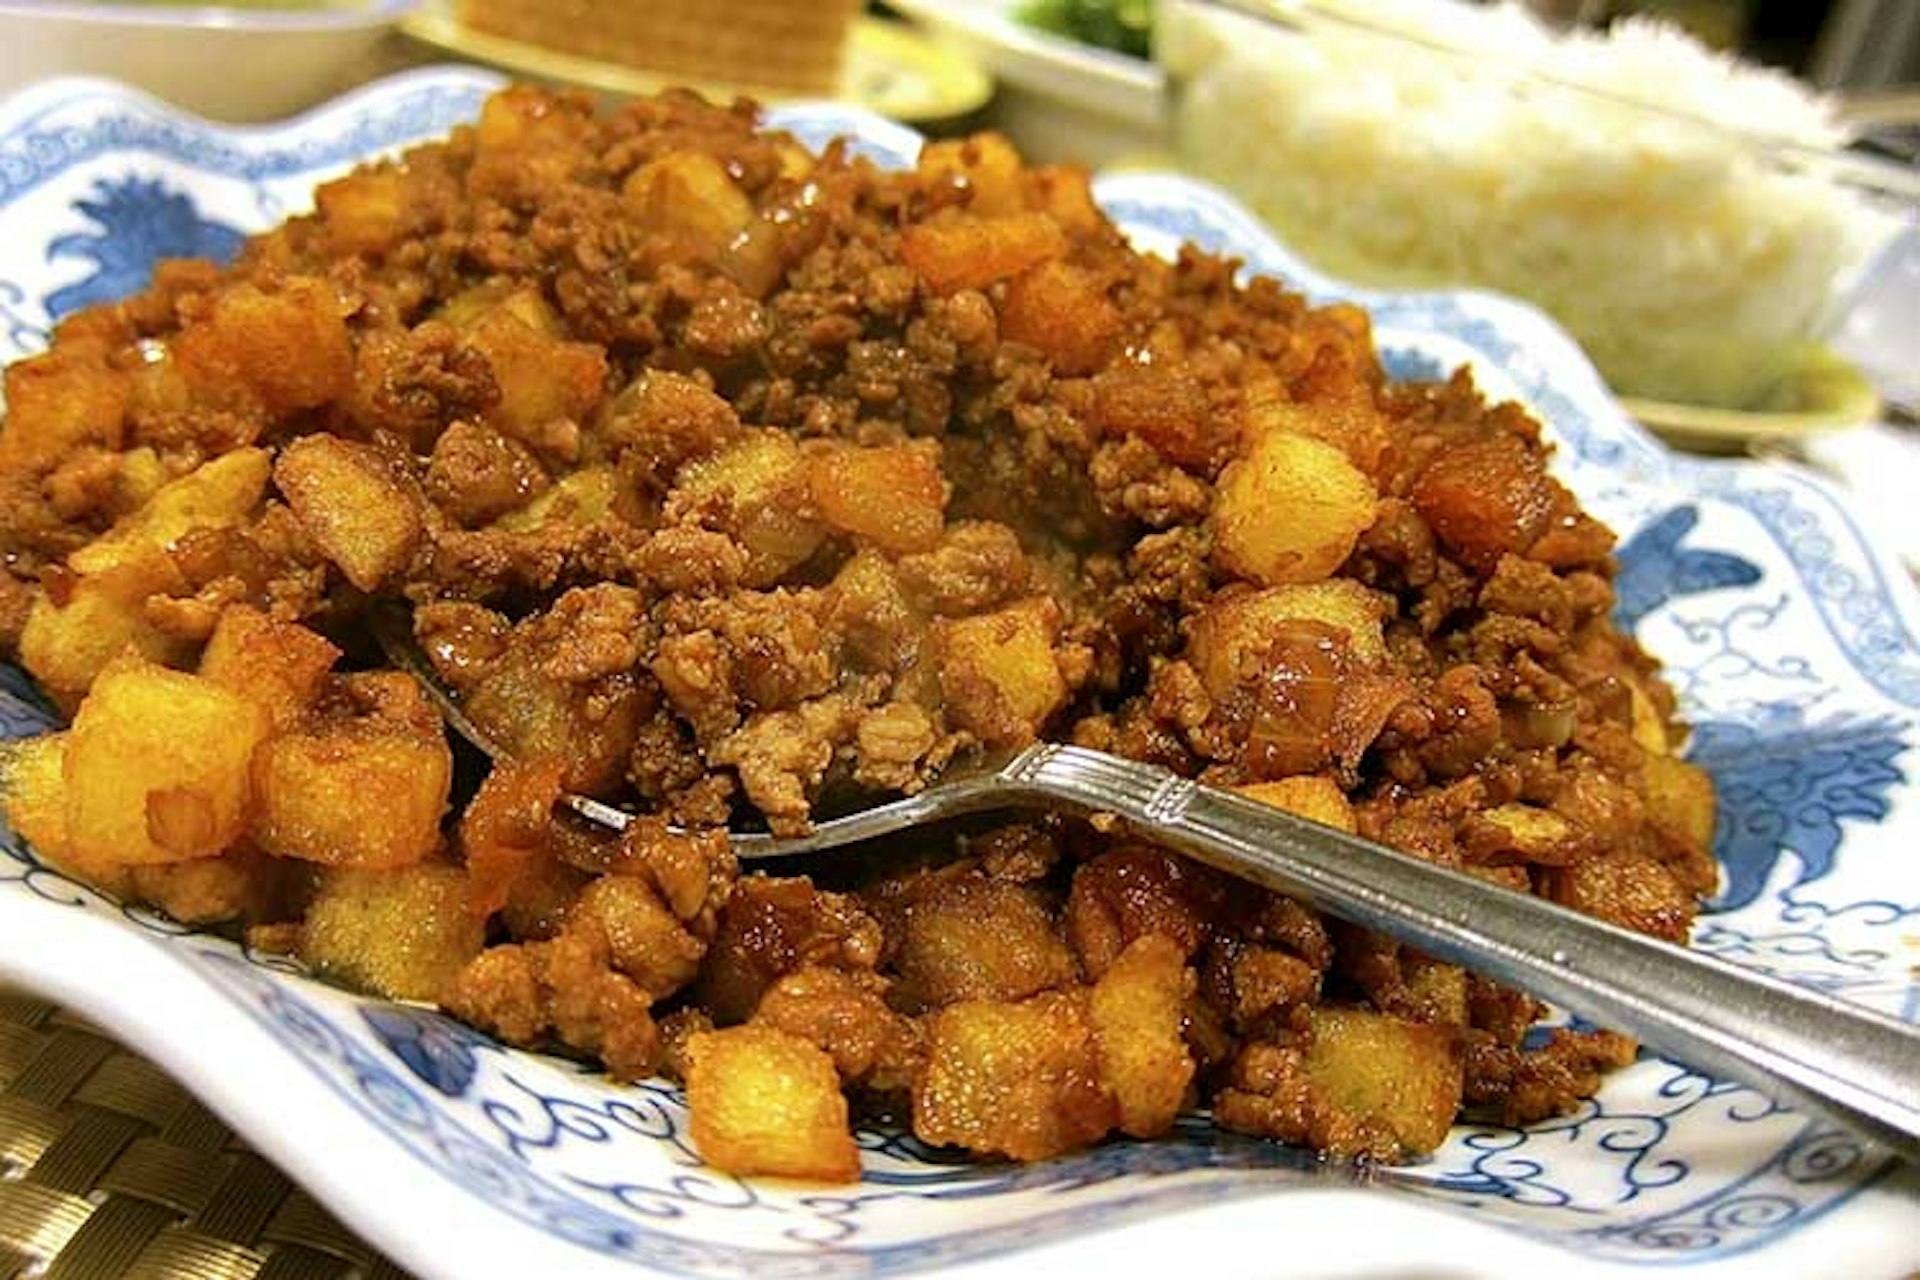 Minchi served over potatoes. Image courtesy of Macau Government Tourism Organisation